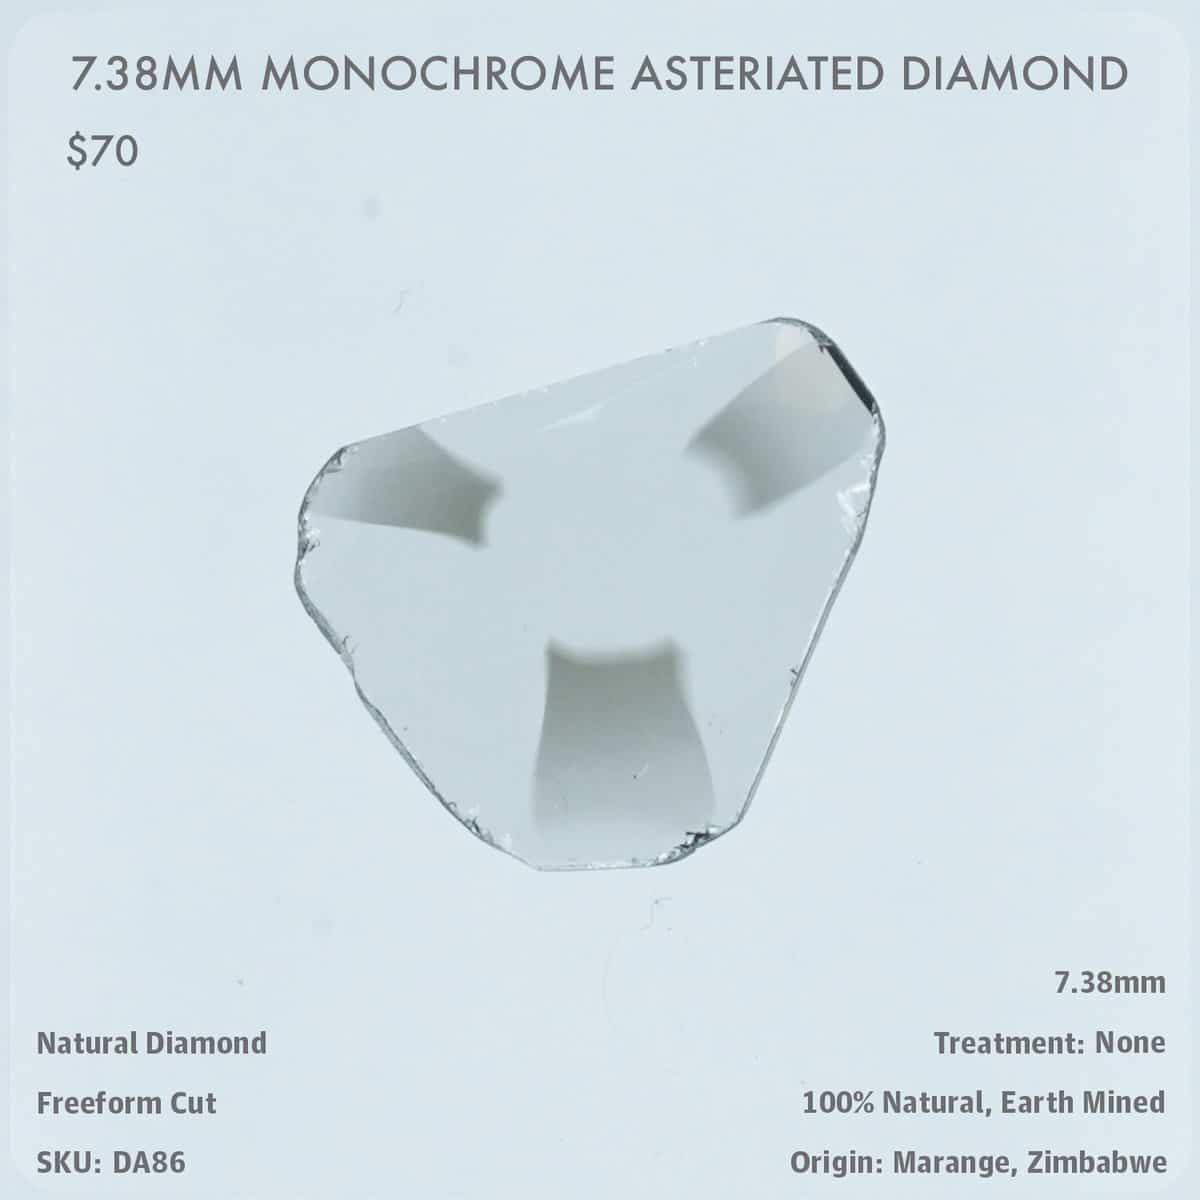 7.38mm Monochrome Asteriated Diamond